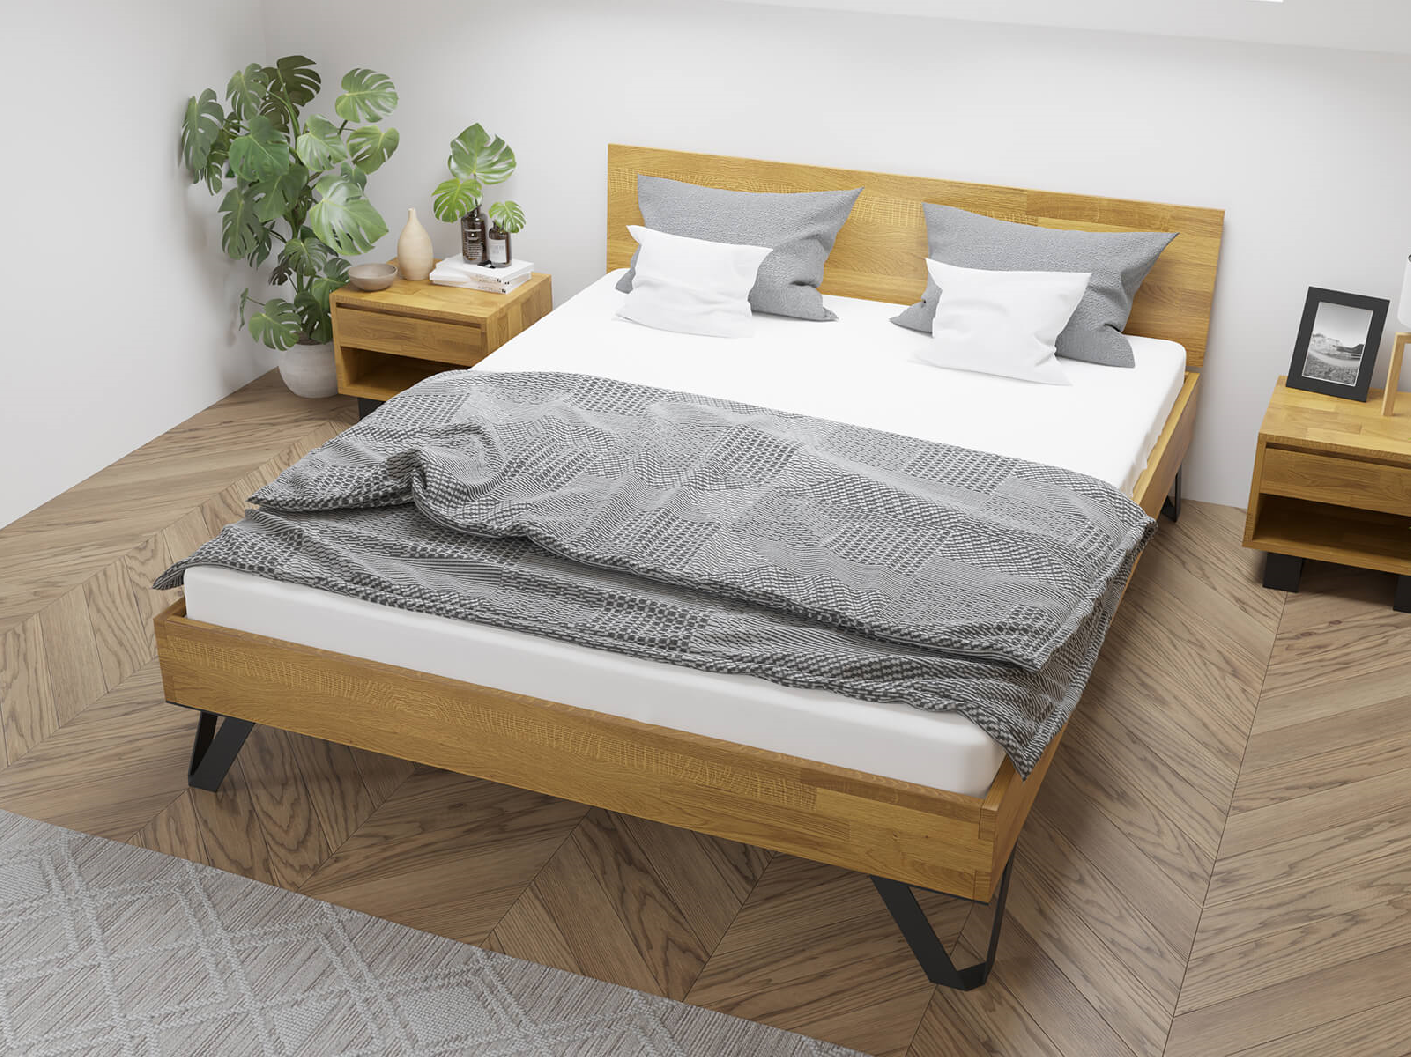 Dubová postel Tero Classic 160x200 cm, dub, masiv